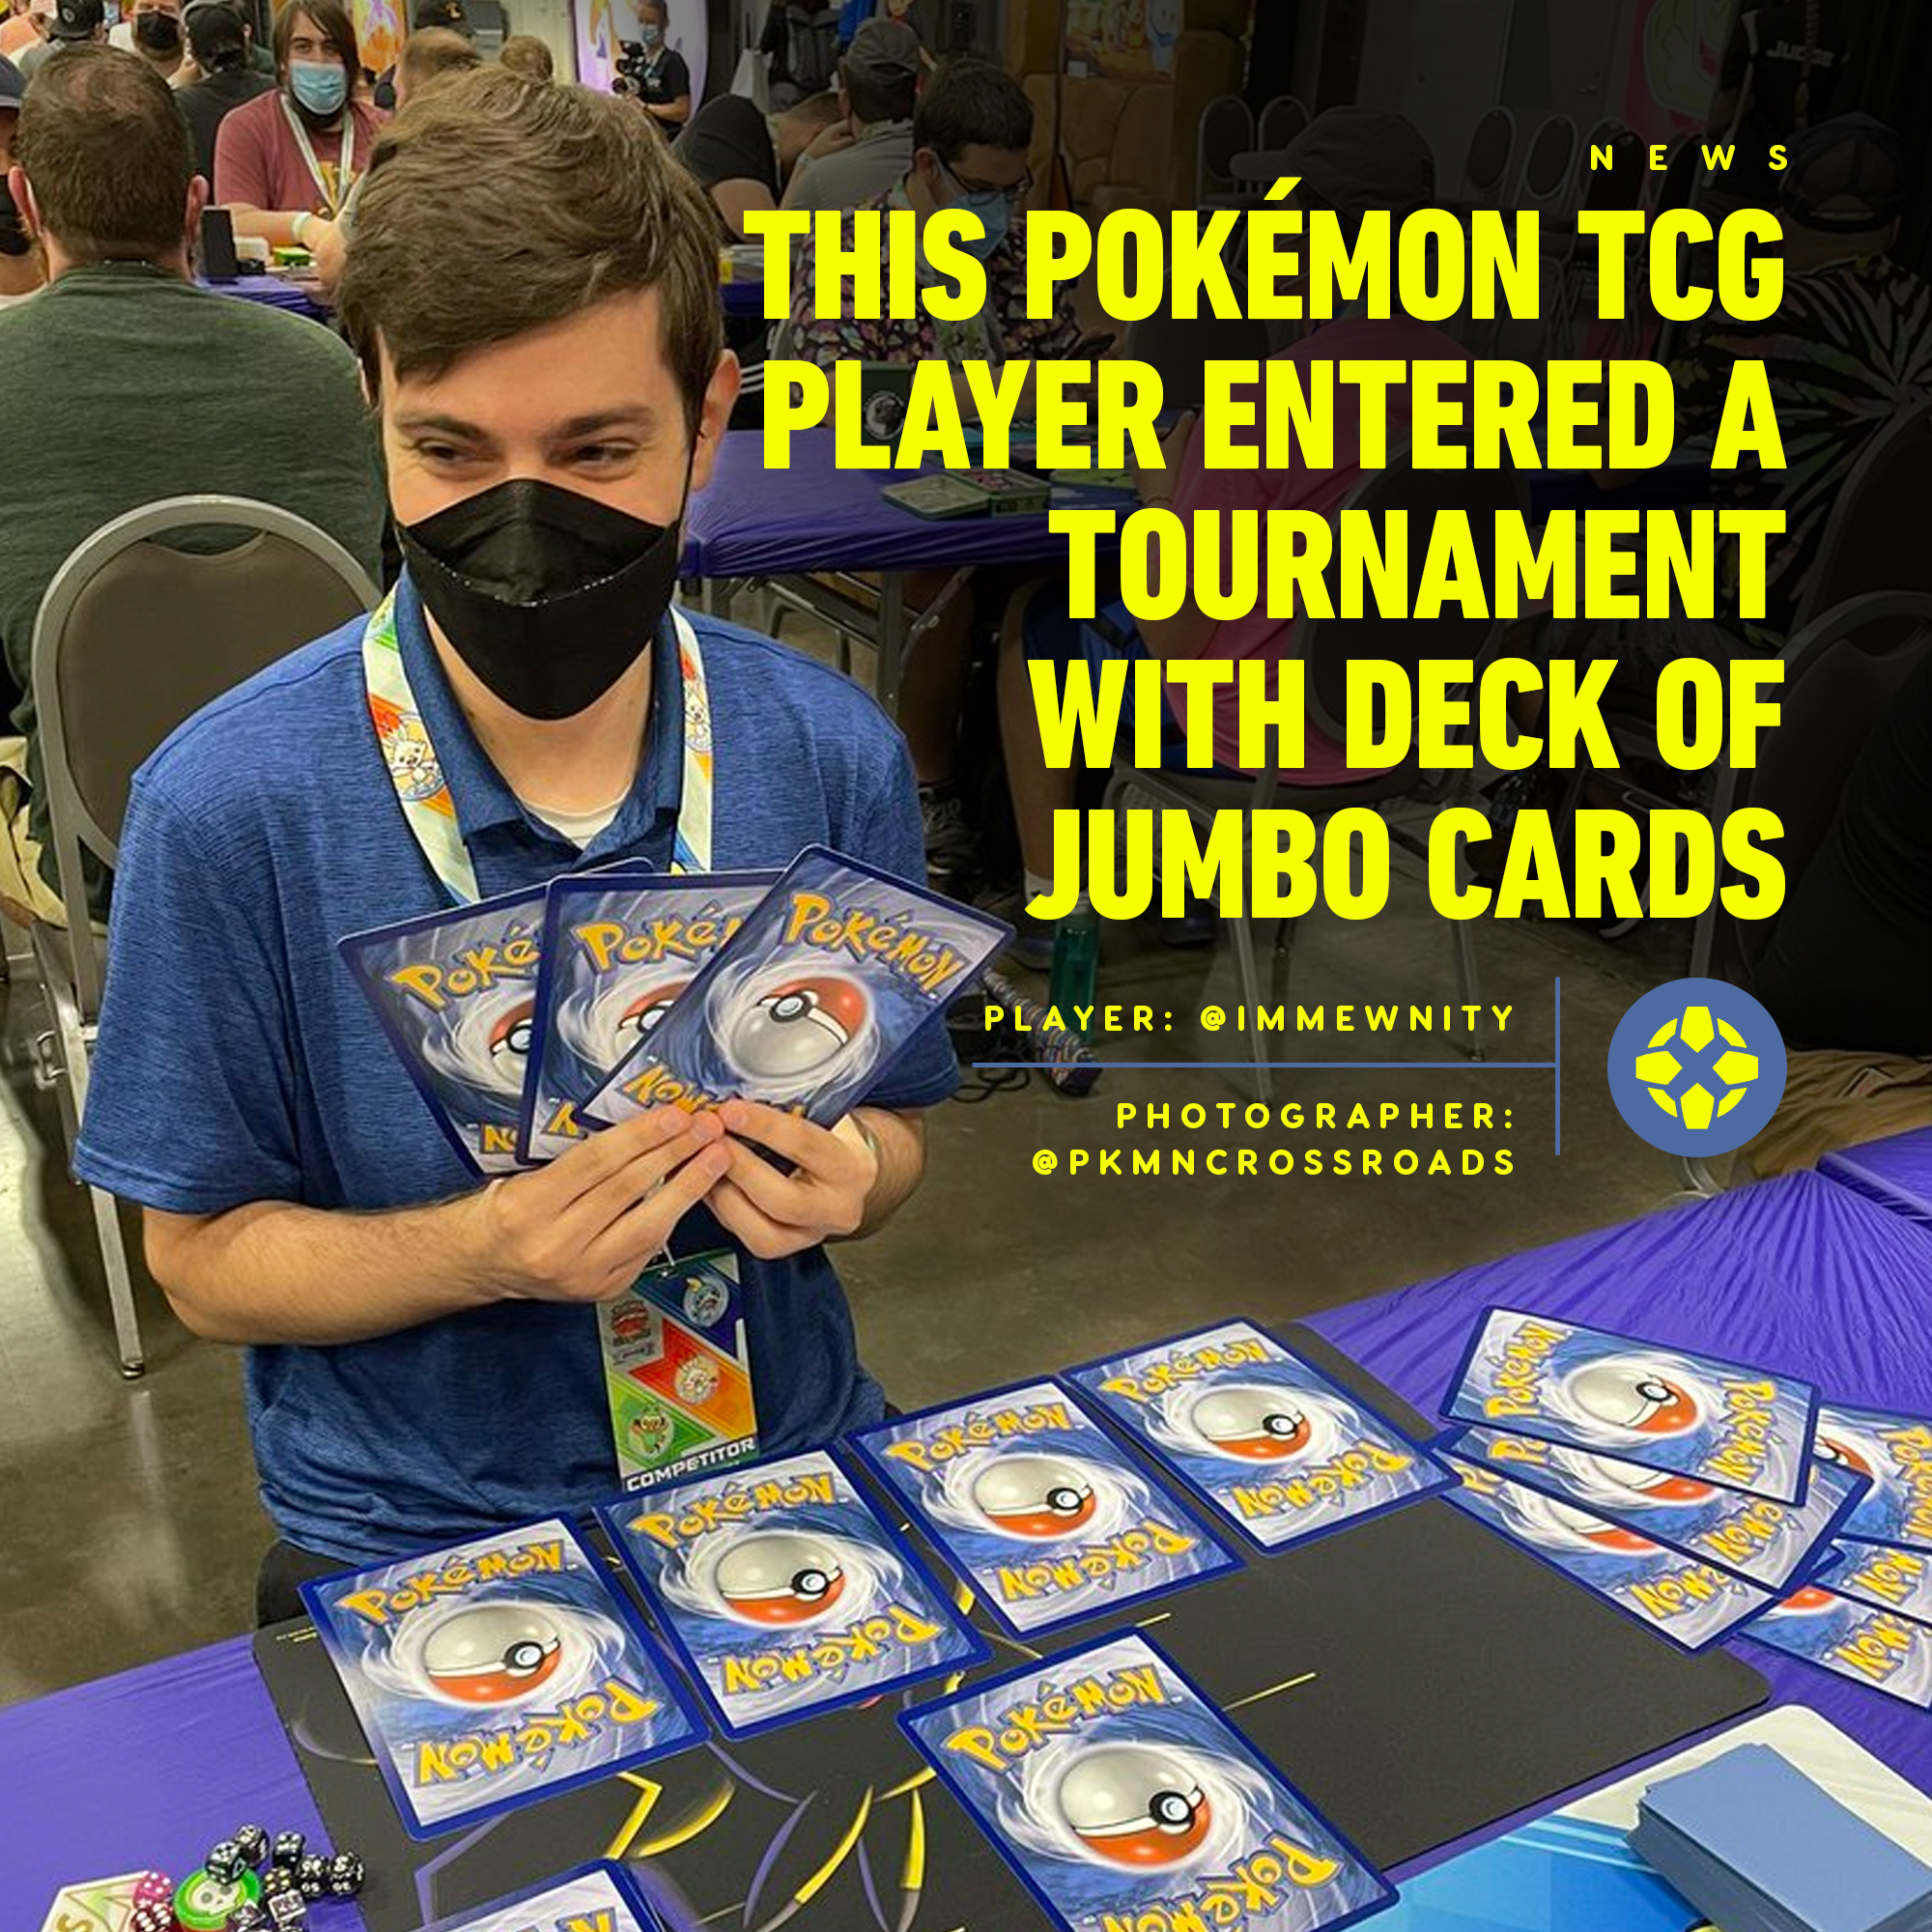 Pokémon TCG player enters US tournament with super-sized deck of